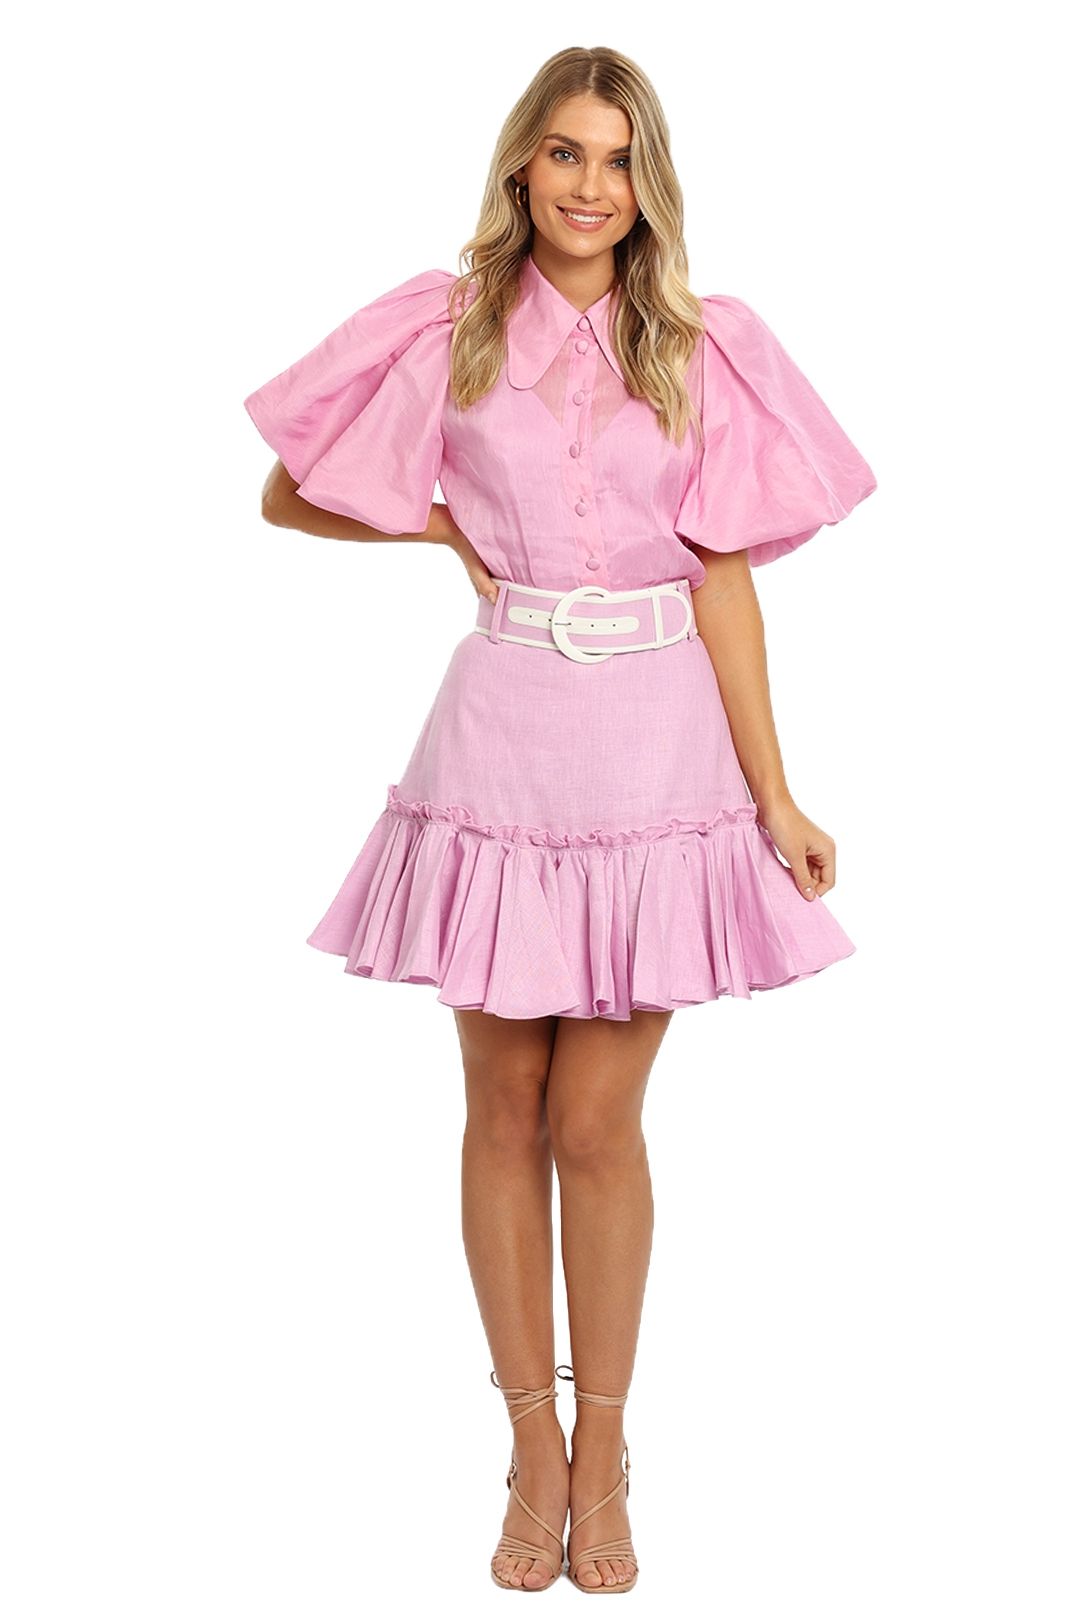 LEO LIN - Dressage Blouse And Skirt Set